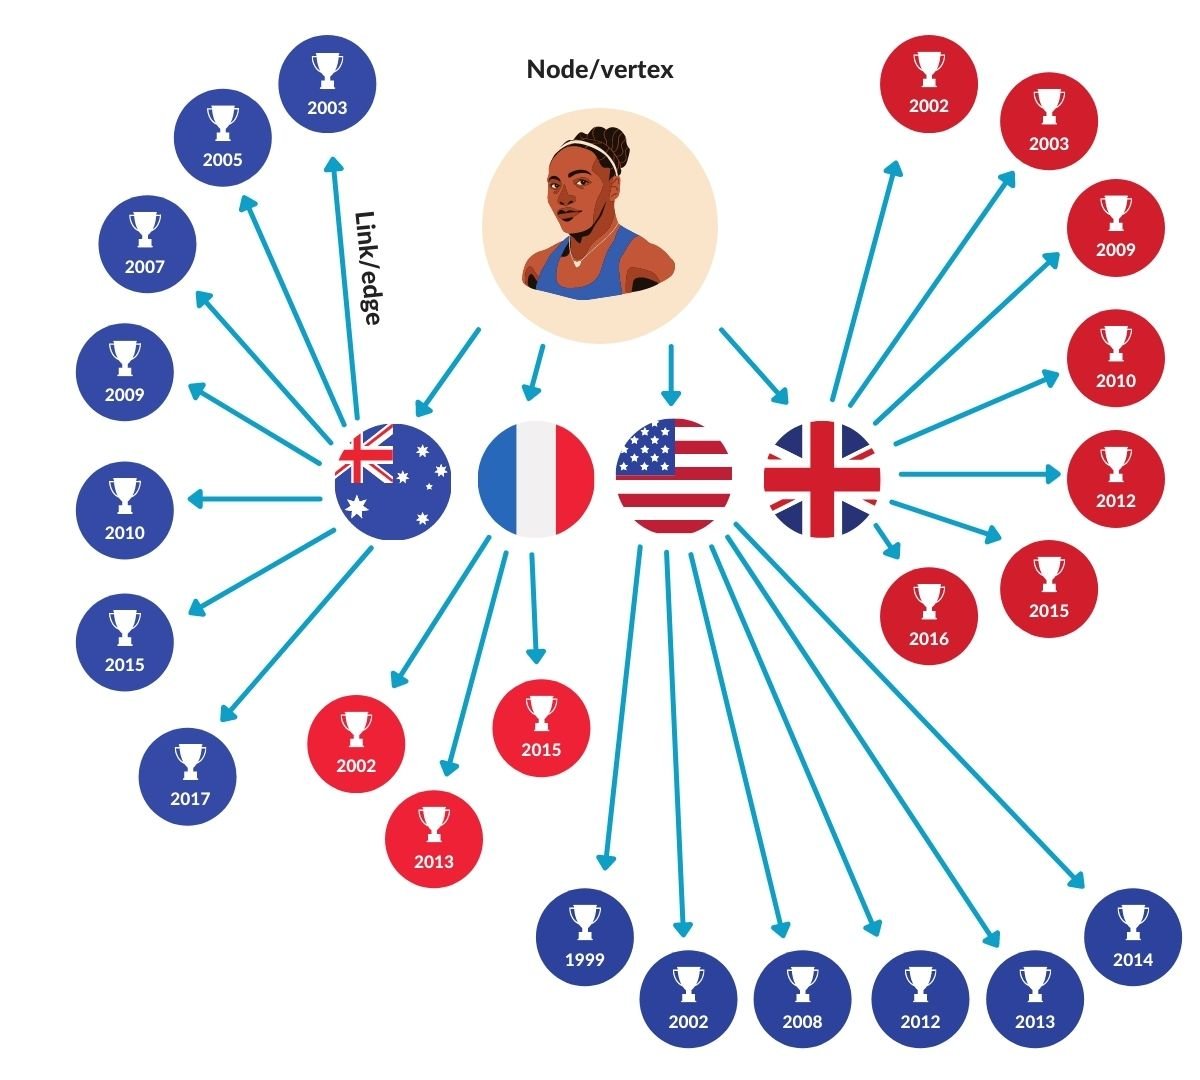 A knowledge graph representation of Serena Williams’ Grand Slam singles titles 